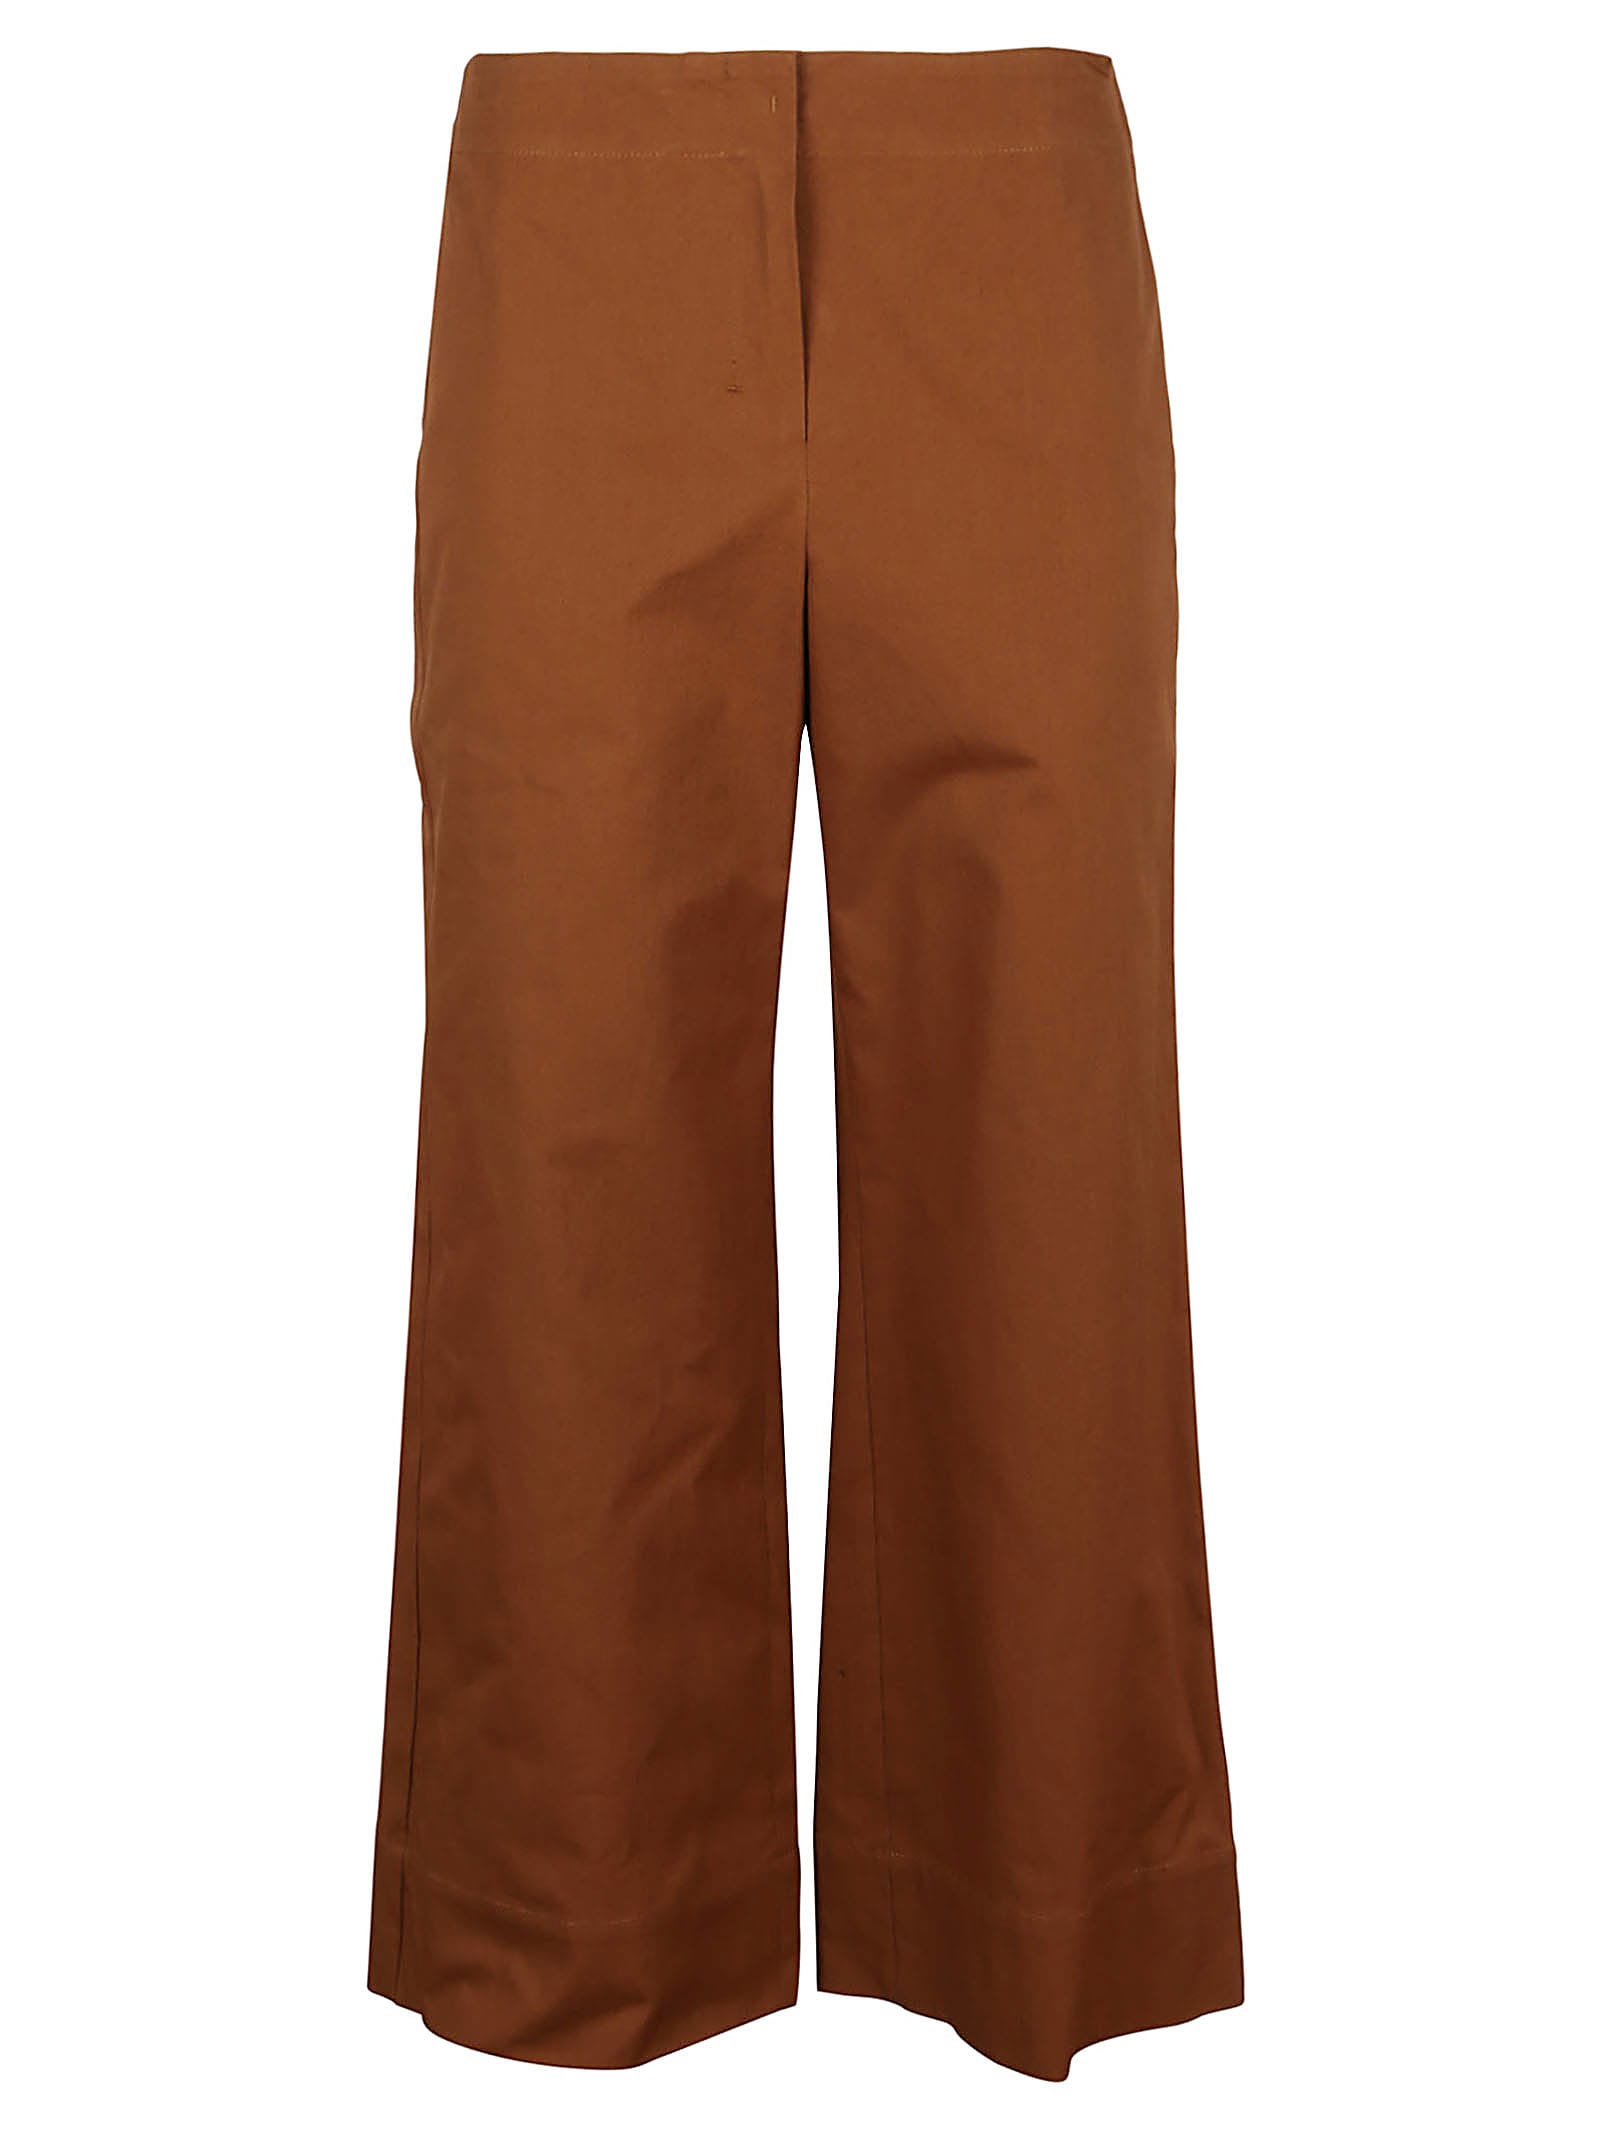 S Max Mara Brown Cotton Trousers